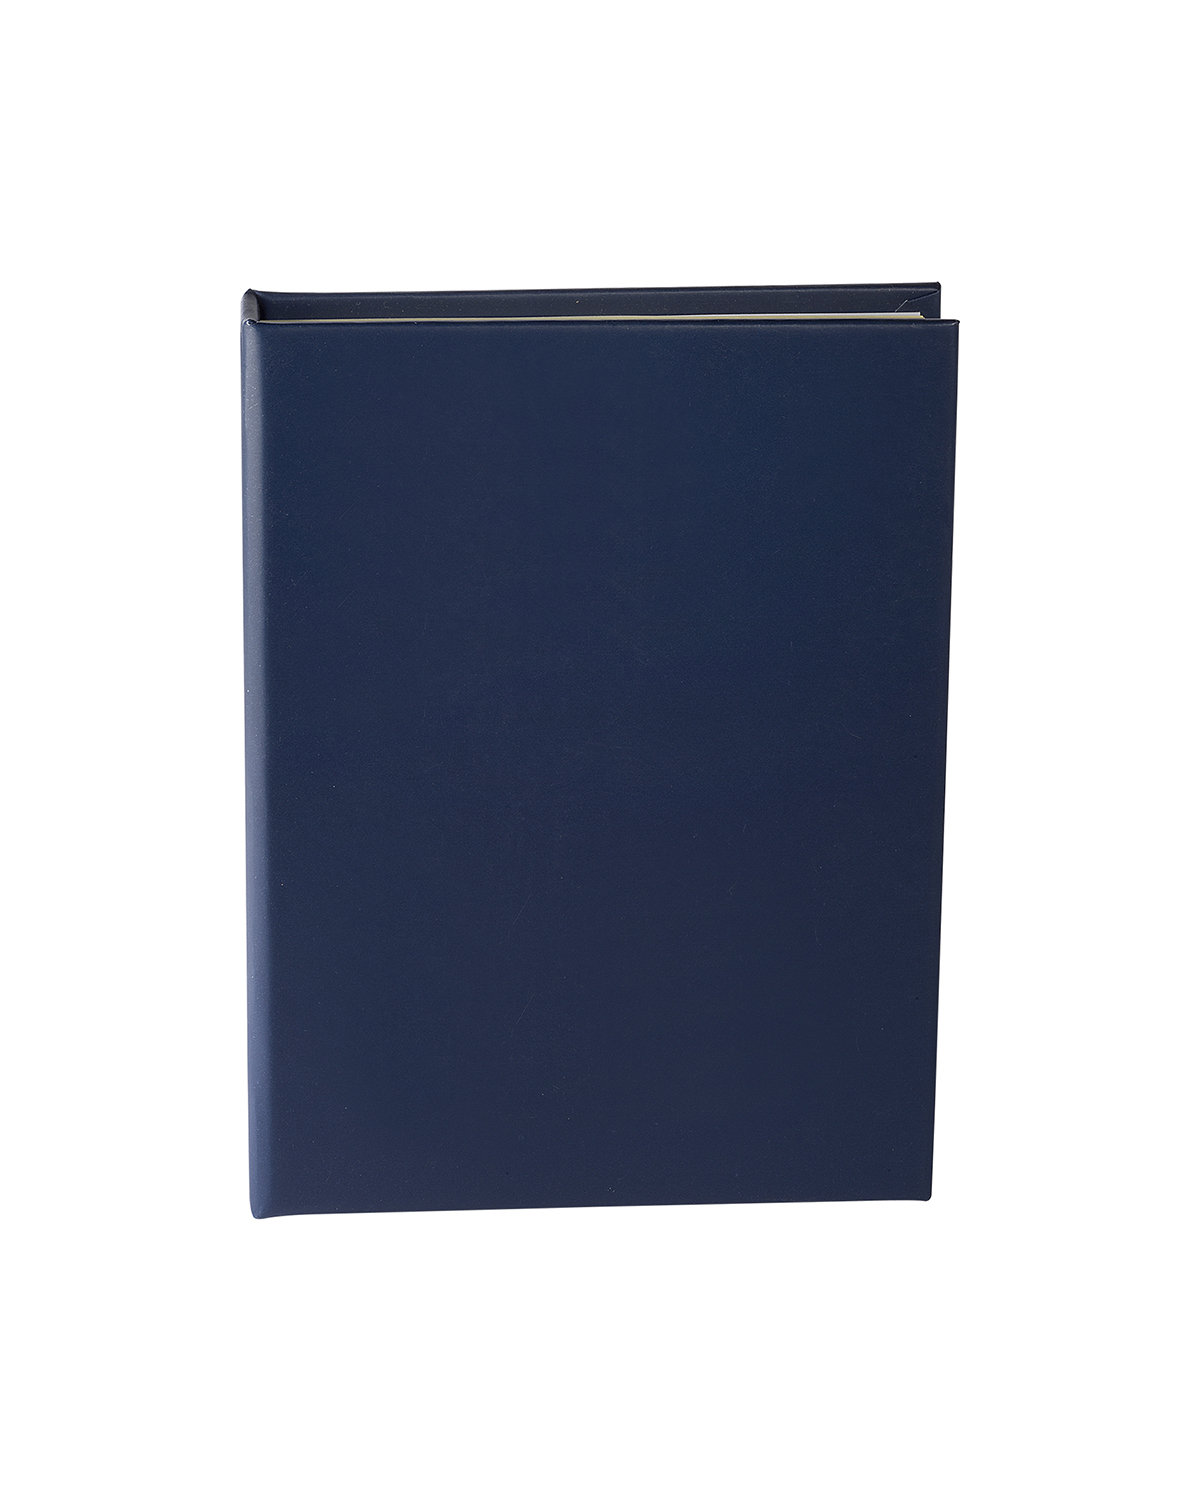 Prime Line Sticky Book navy blue 